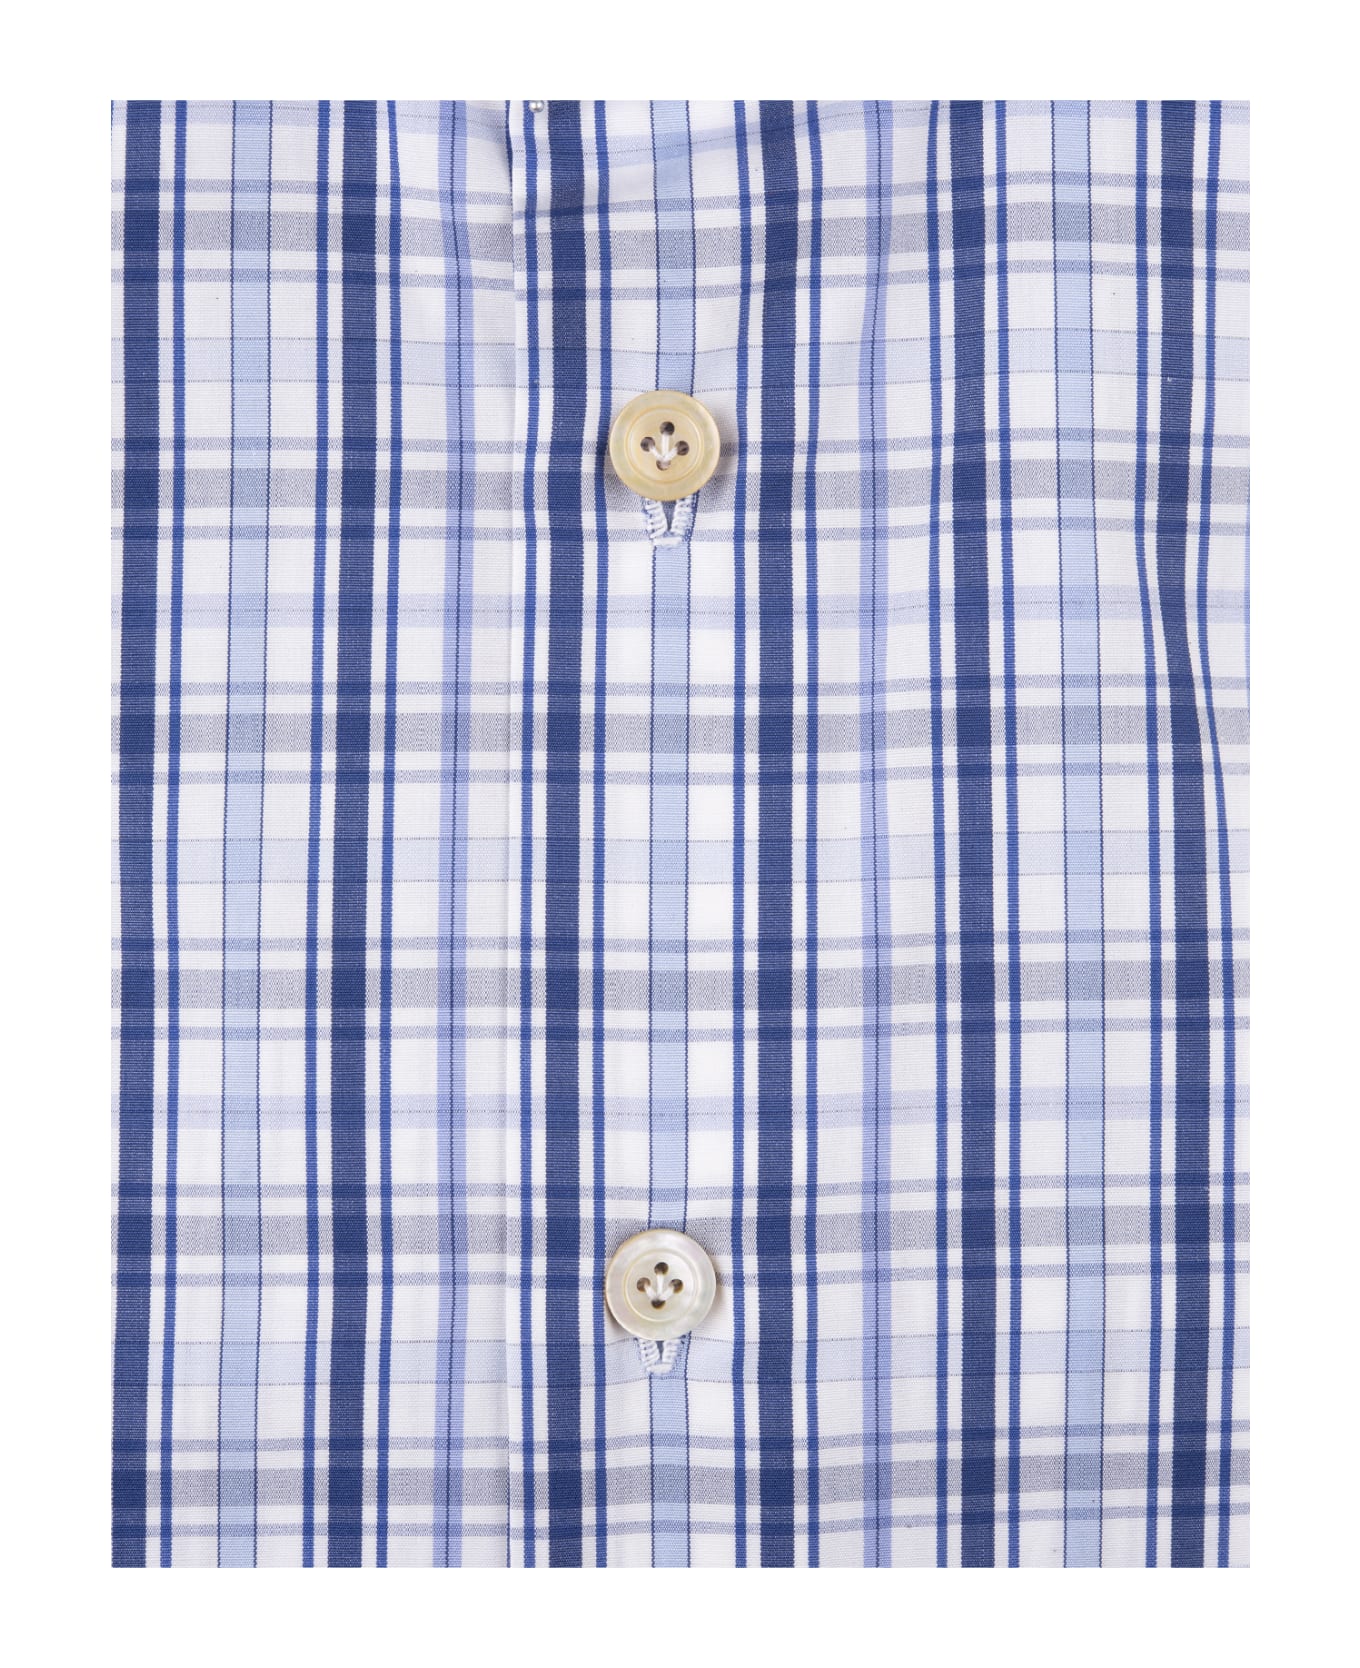 Kiton Blue Check Pattern Shirt - Blue